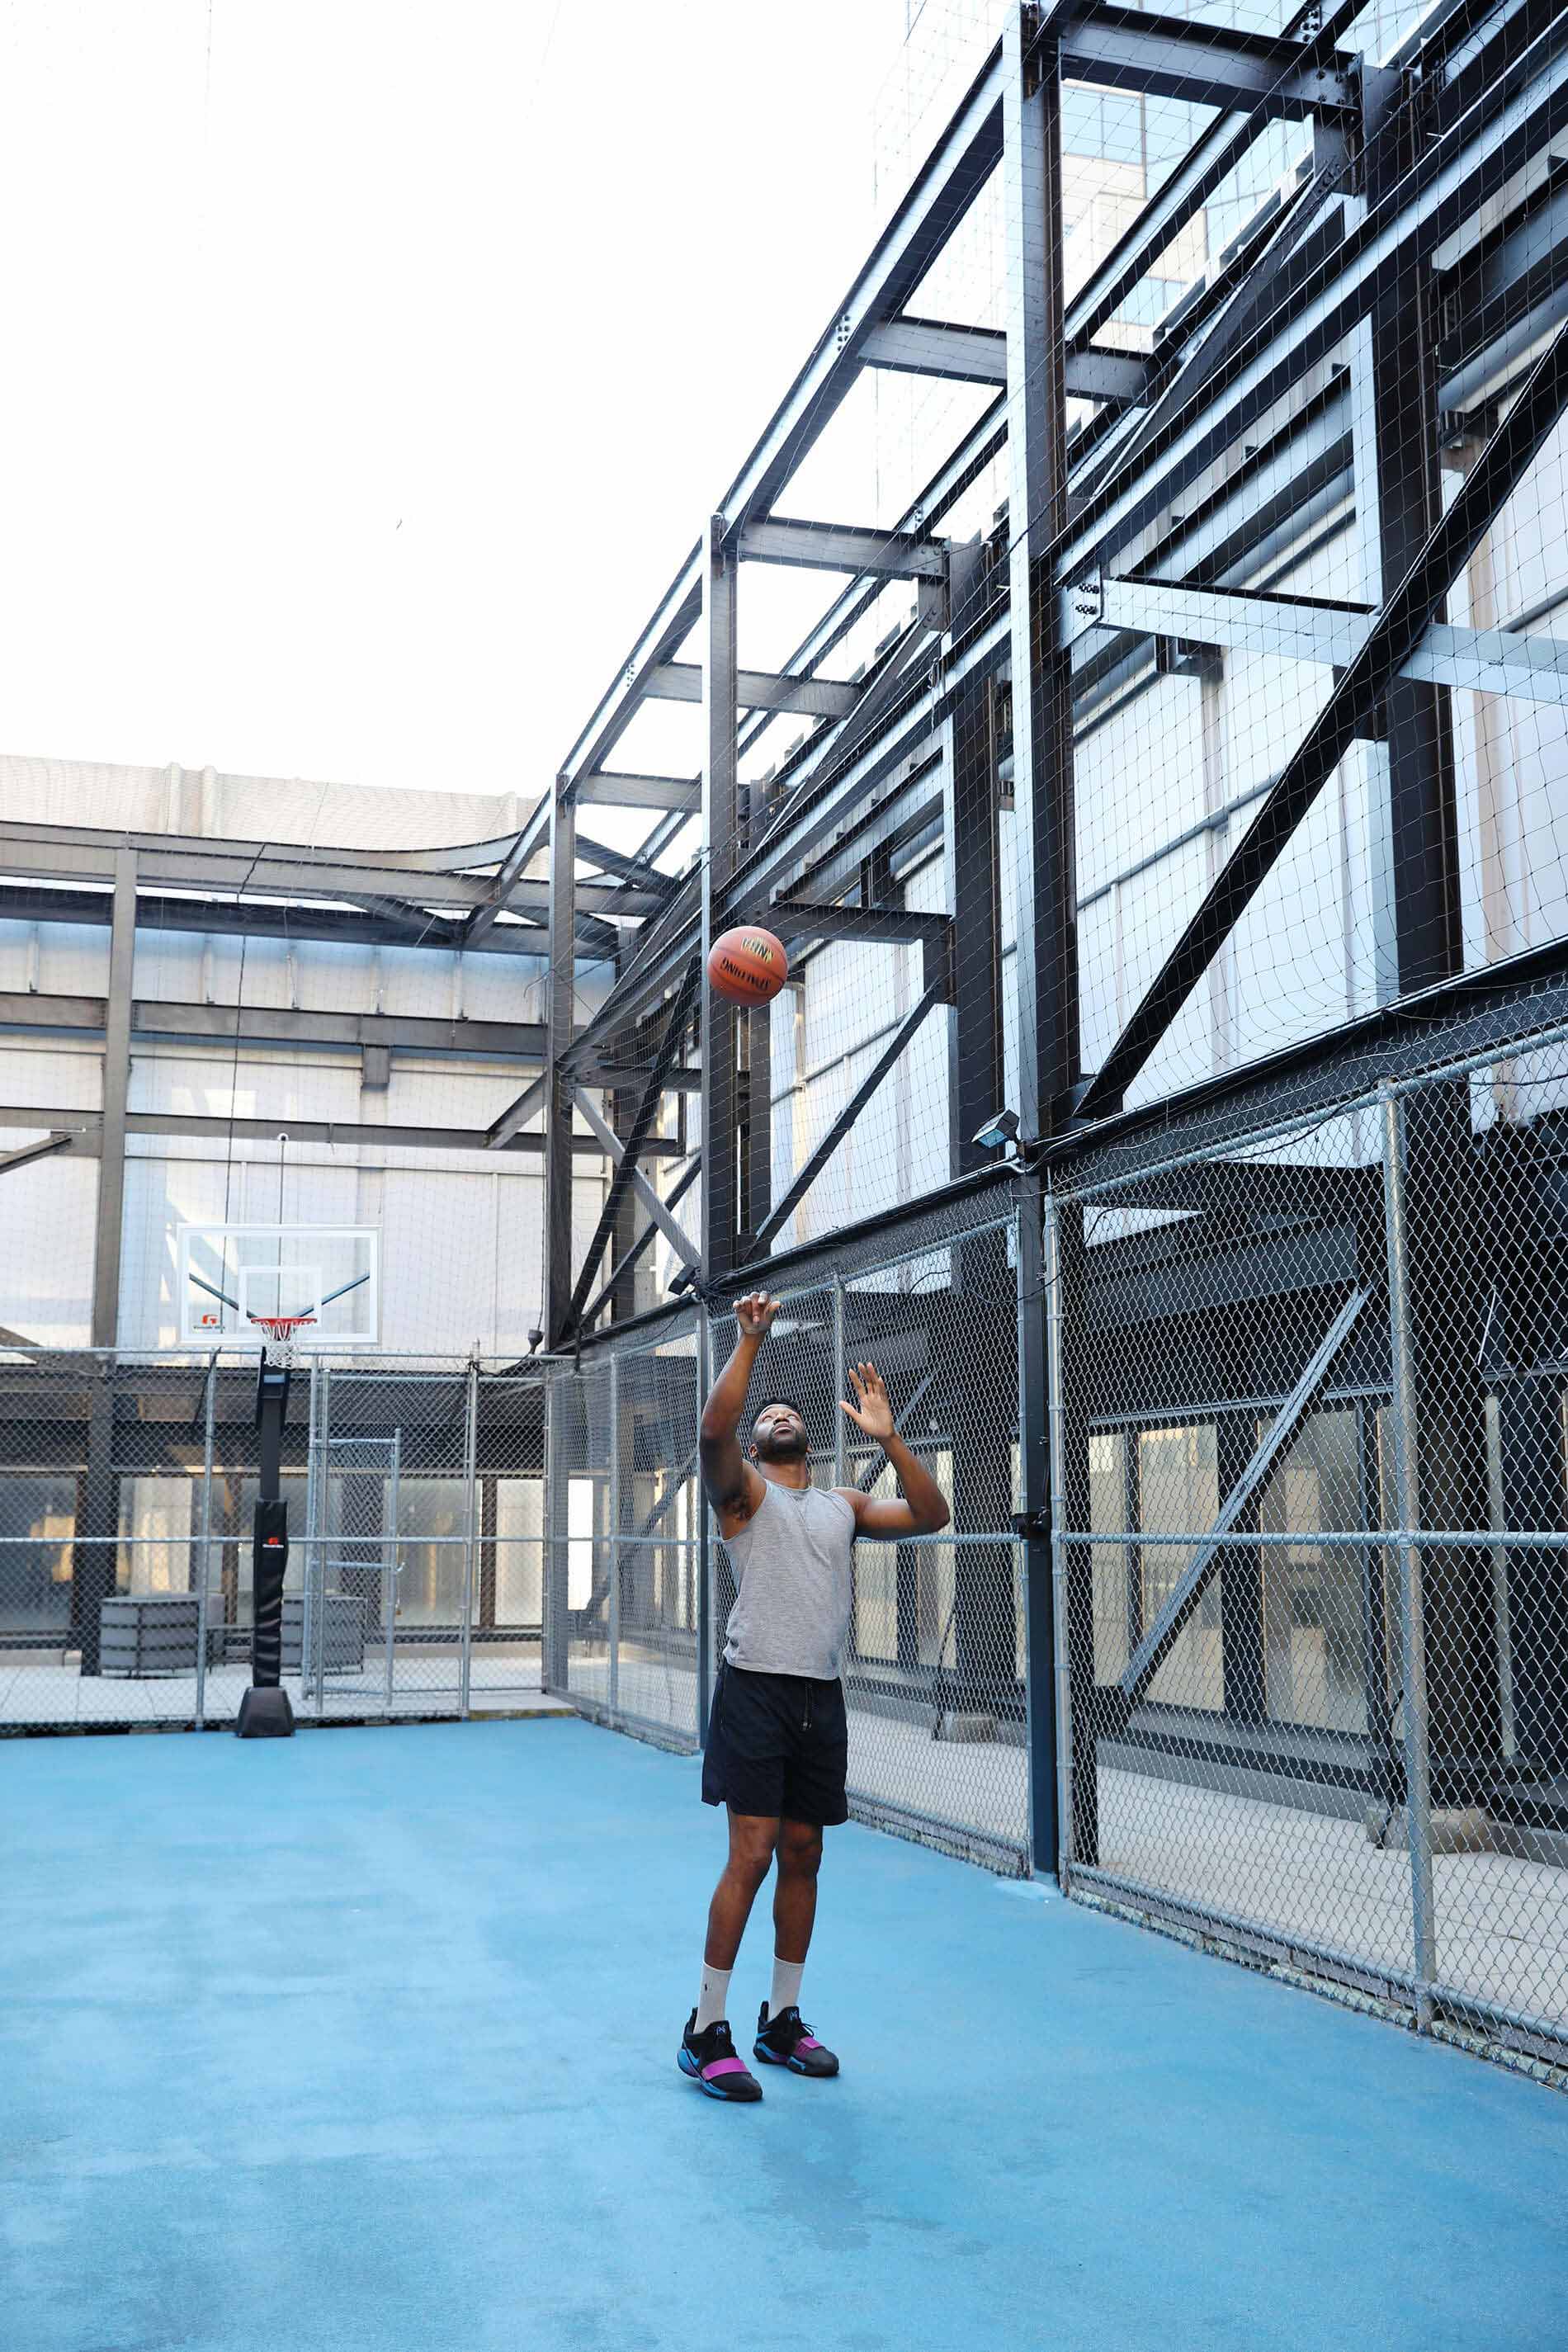 Man playing basketball